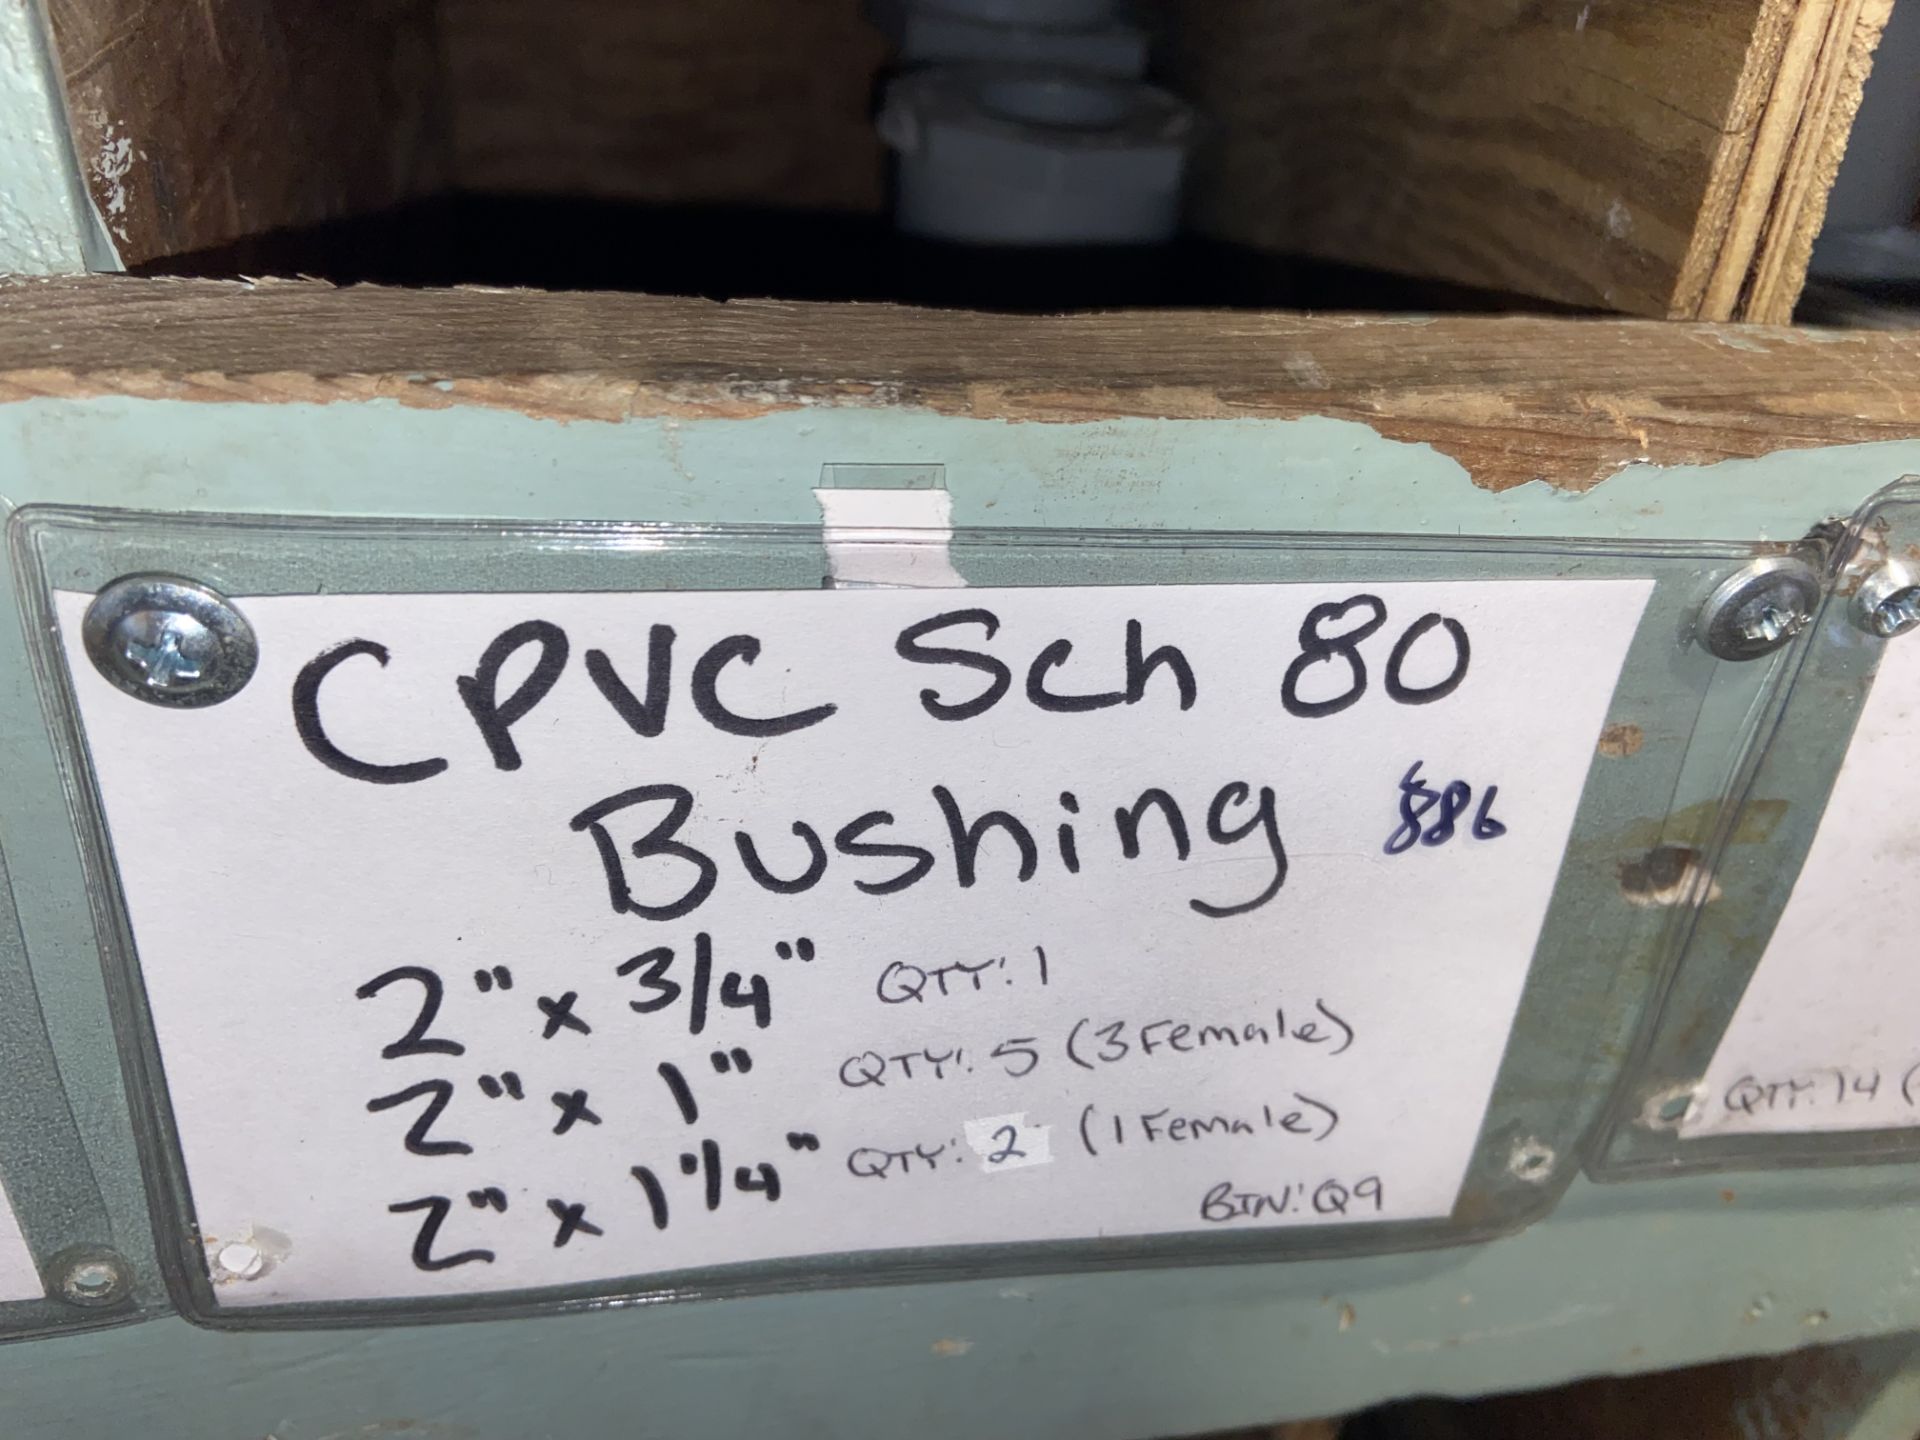 (18) 2”x1 1/2” Female CPVC Sch 80 Bushing(Bin:Q8) (LOCATED IN MONROEVILLE, PA) - Image 4 of 8